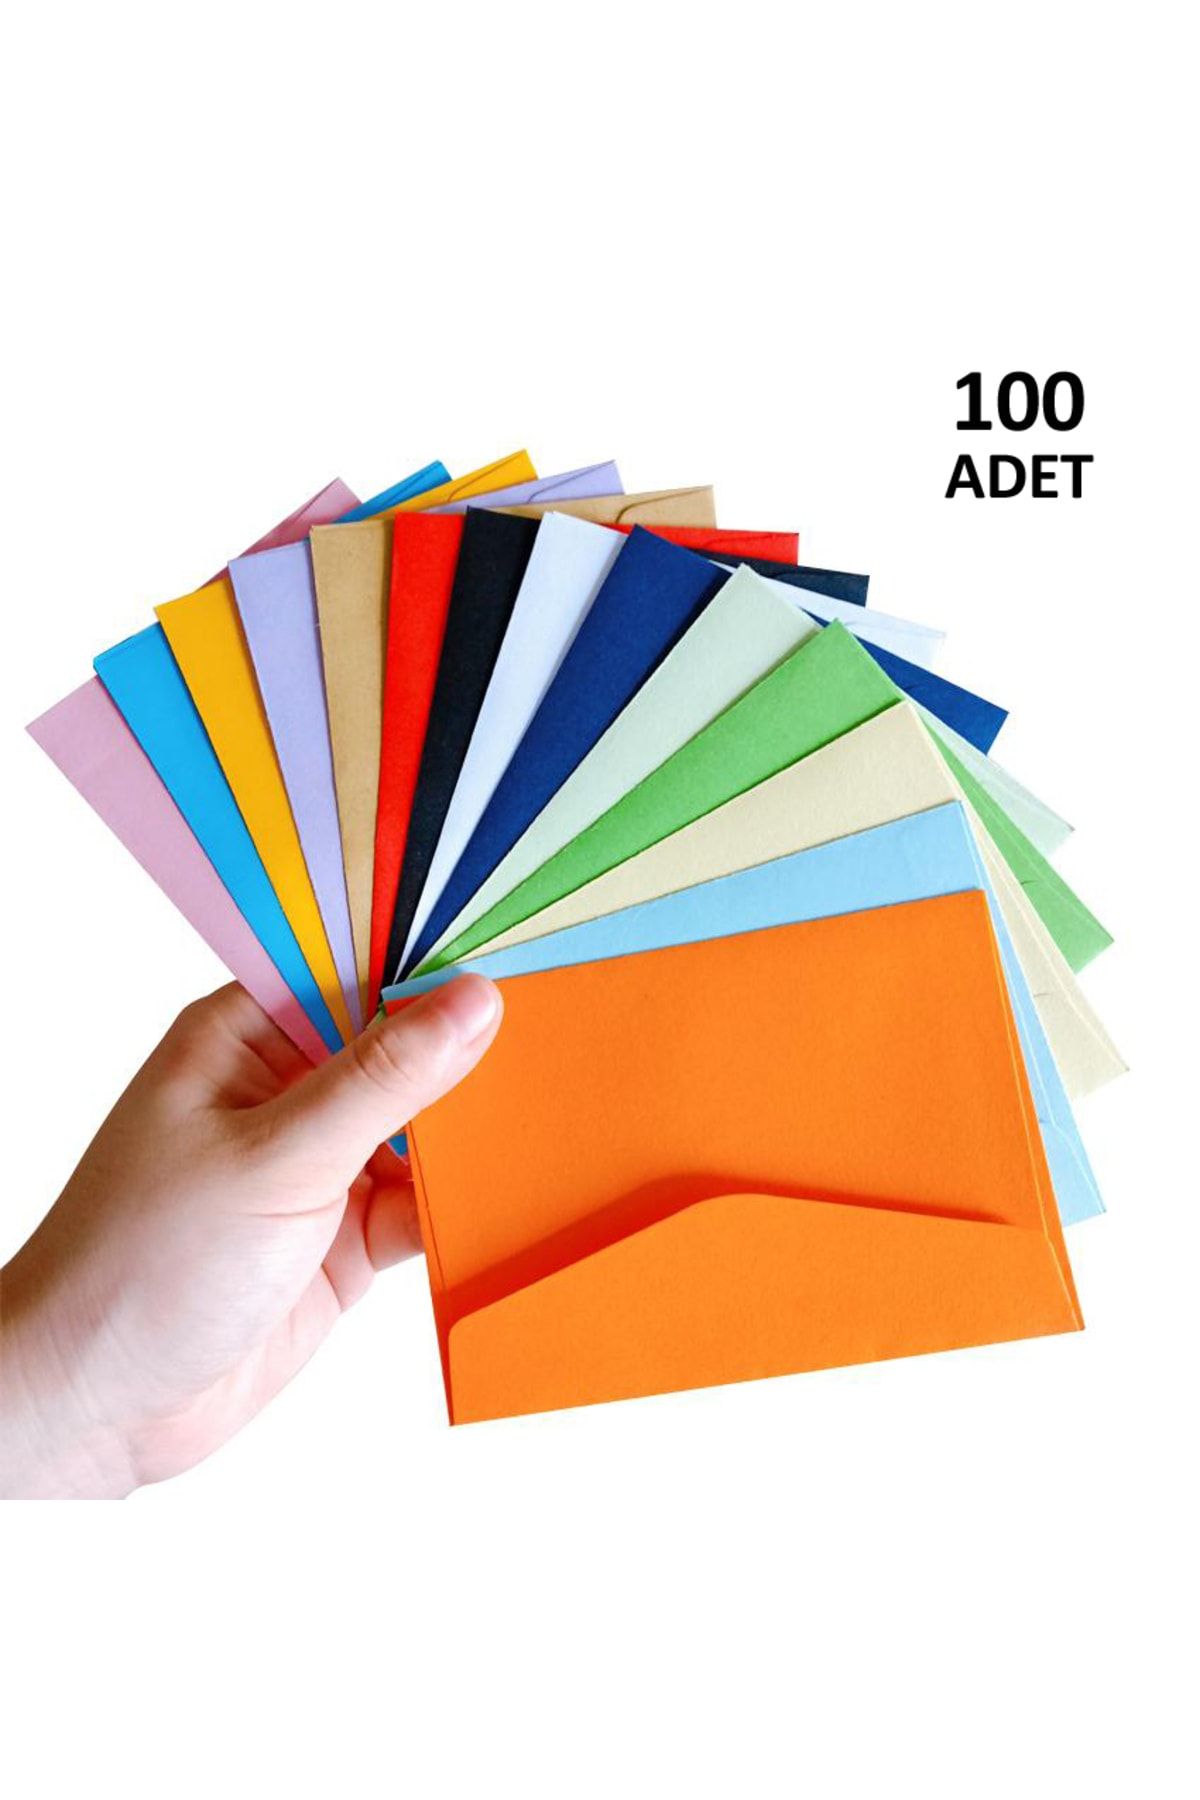 Hobialem 100 Adet, Renkli Zarf, 13x18 Cm, Büyük Boy, Renkli Zarflar, Karışık Renklerde, Mektup Zarfı